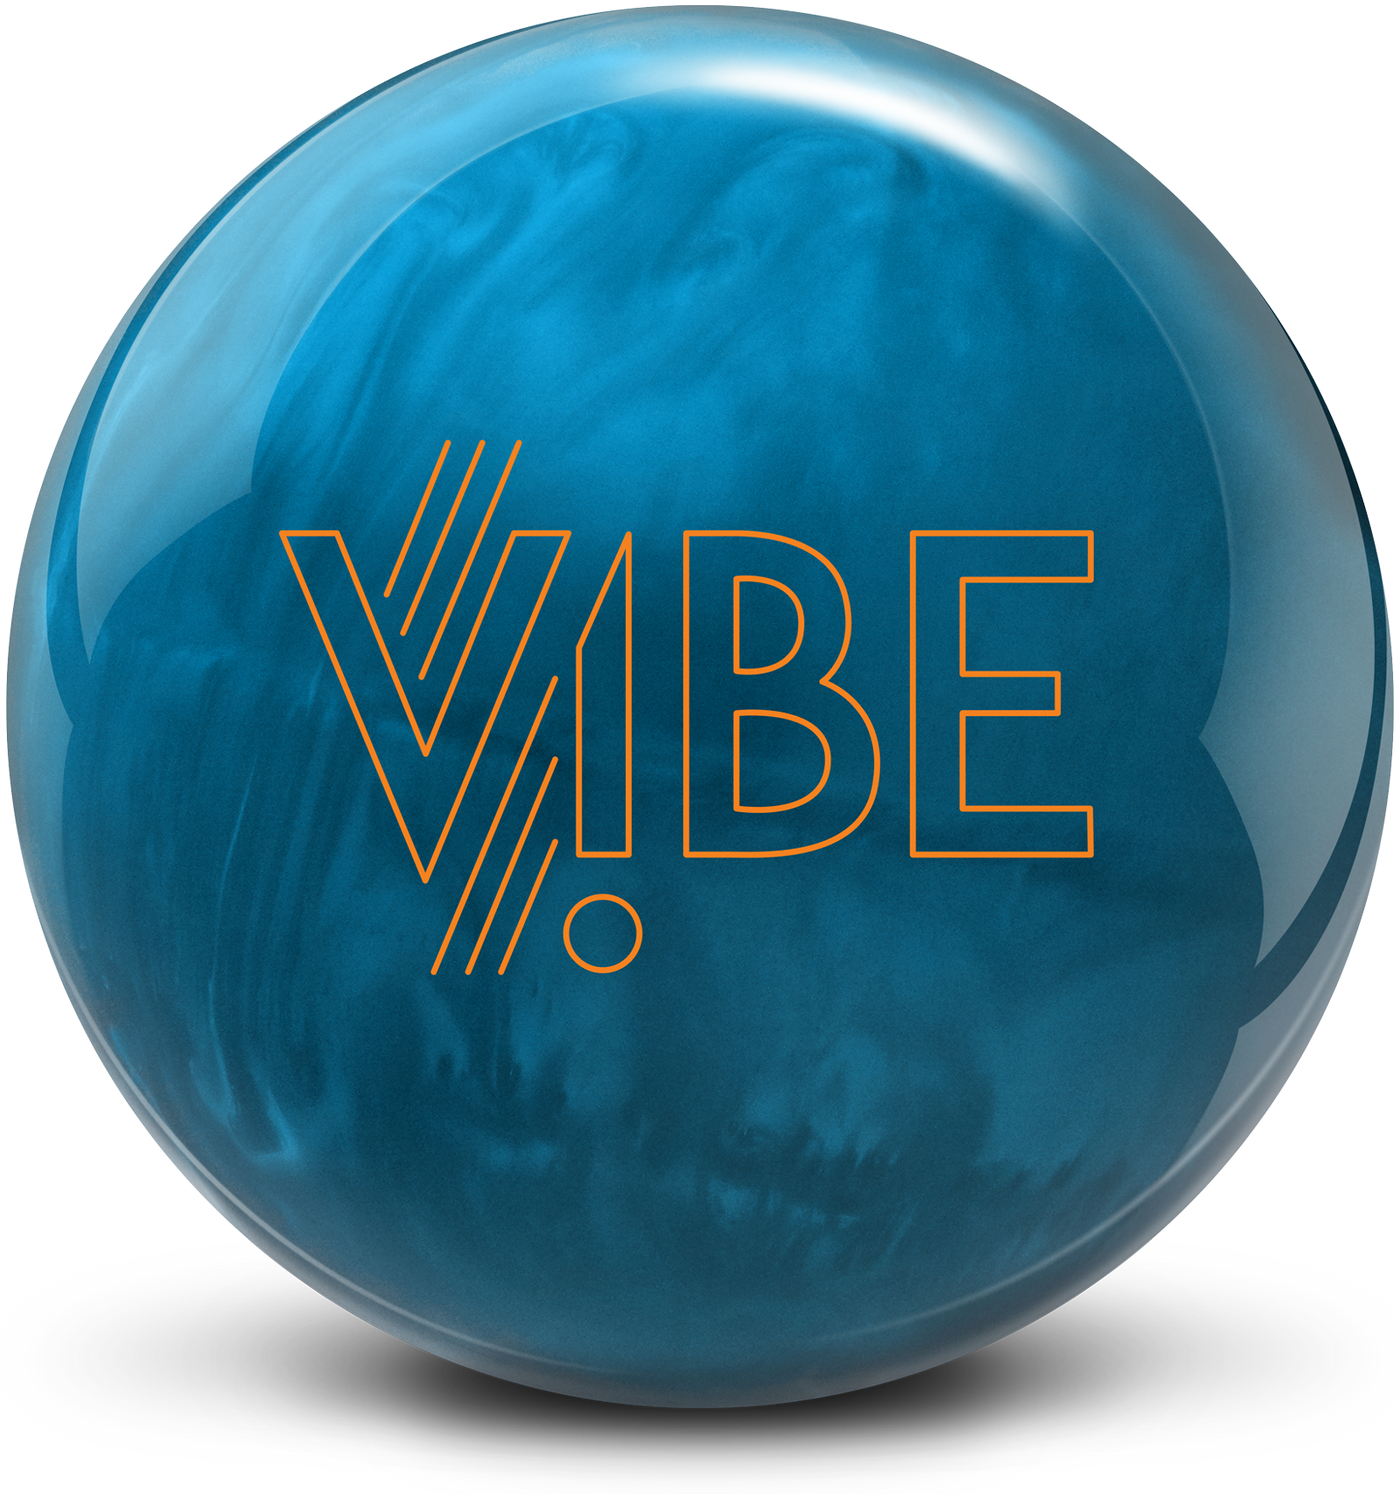 Ocean VIBE bowling ball